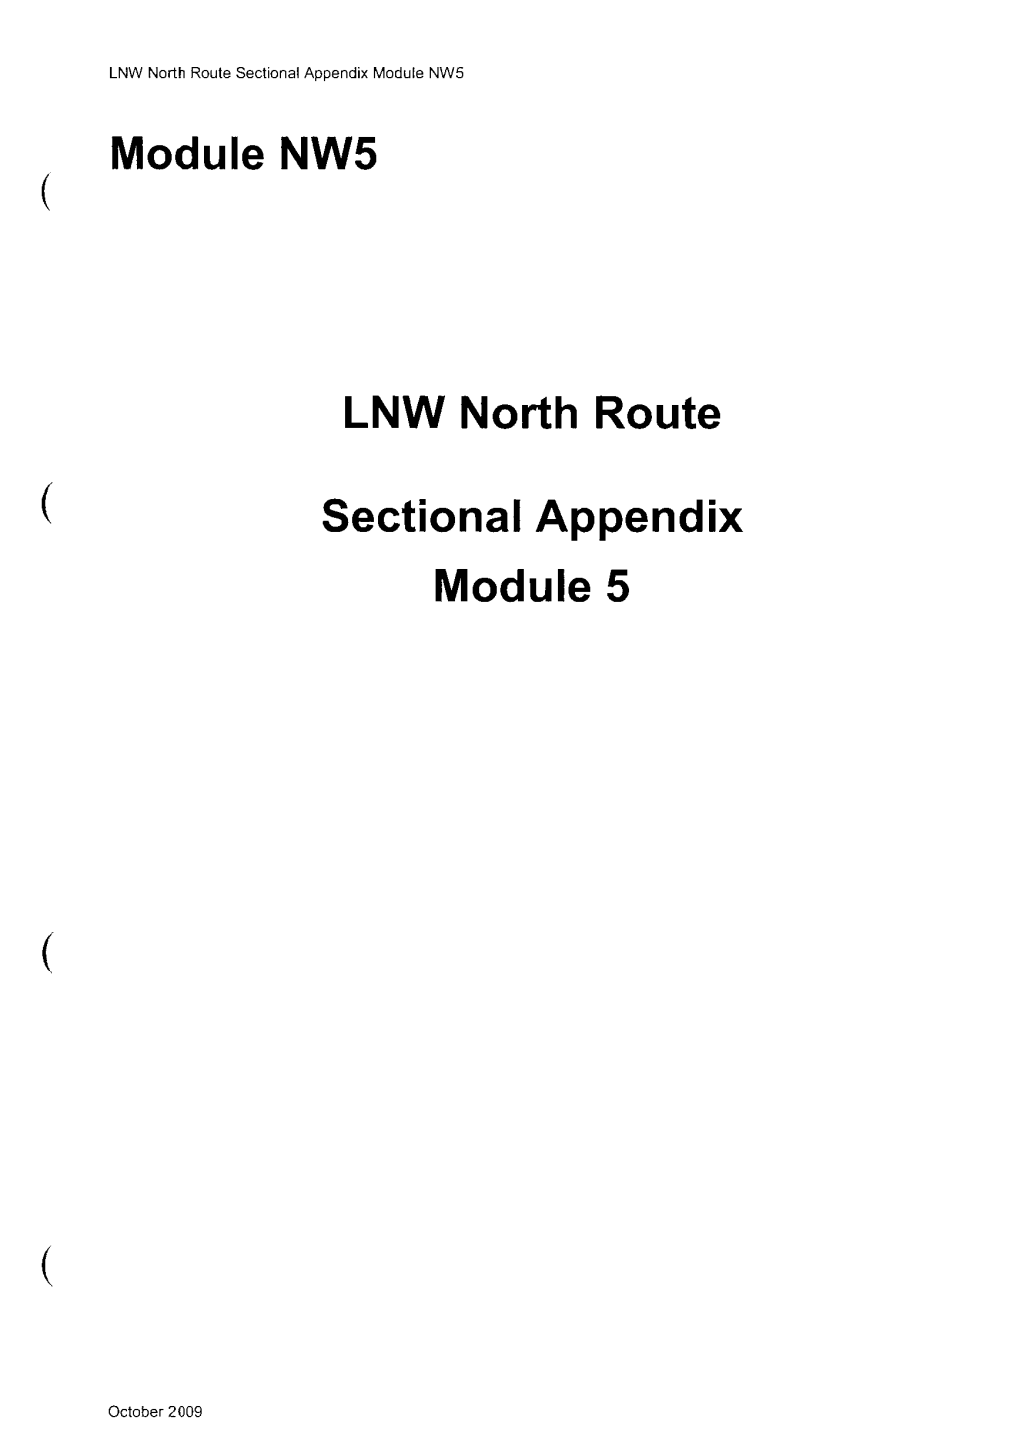 C Module NW5 C S E C T I O N a L Appendix LNW North Route Module 5